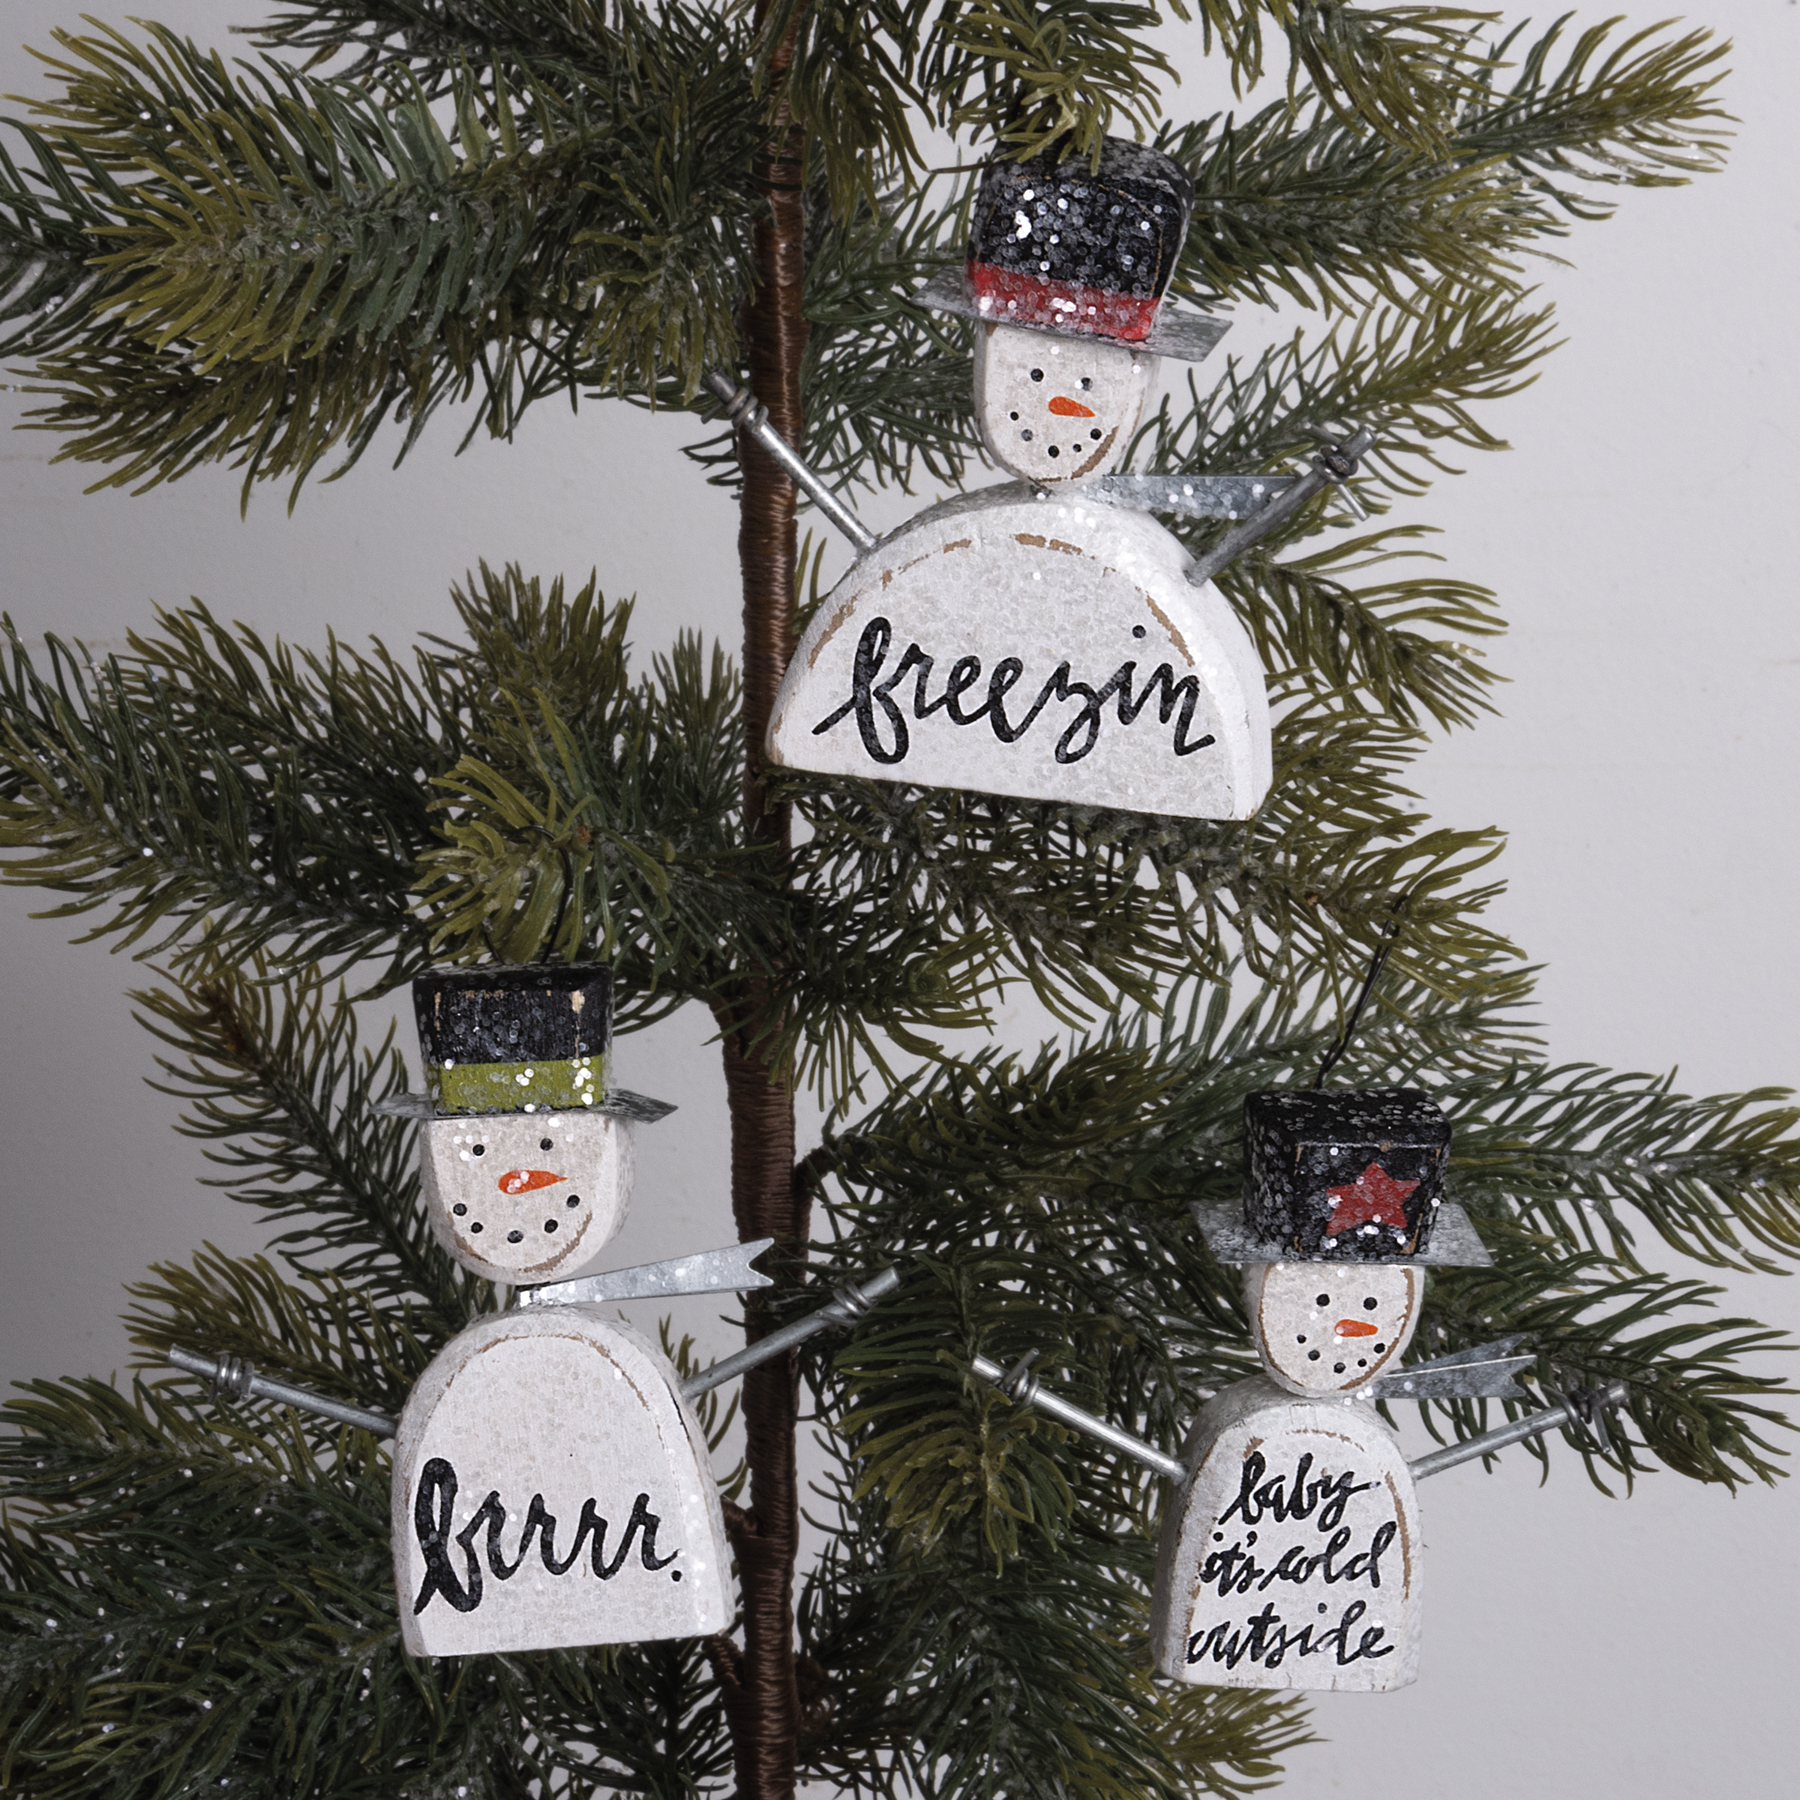 Details about   Primitives by Kathy homespun Shirt Ornaments w snowmen Christmas Tree 16499 3pc 